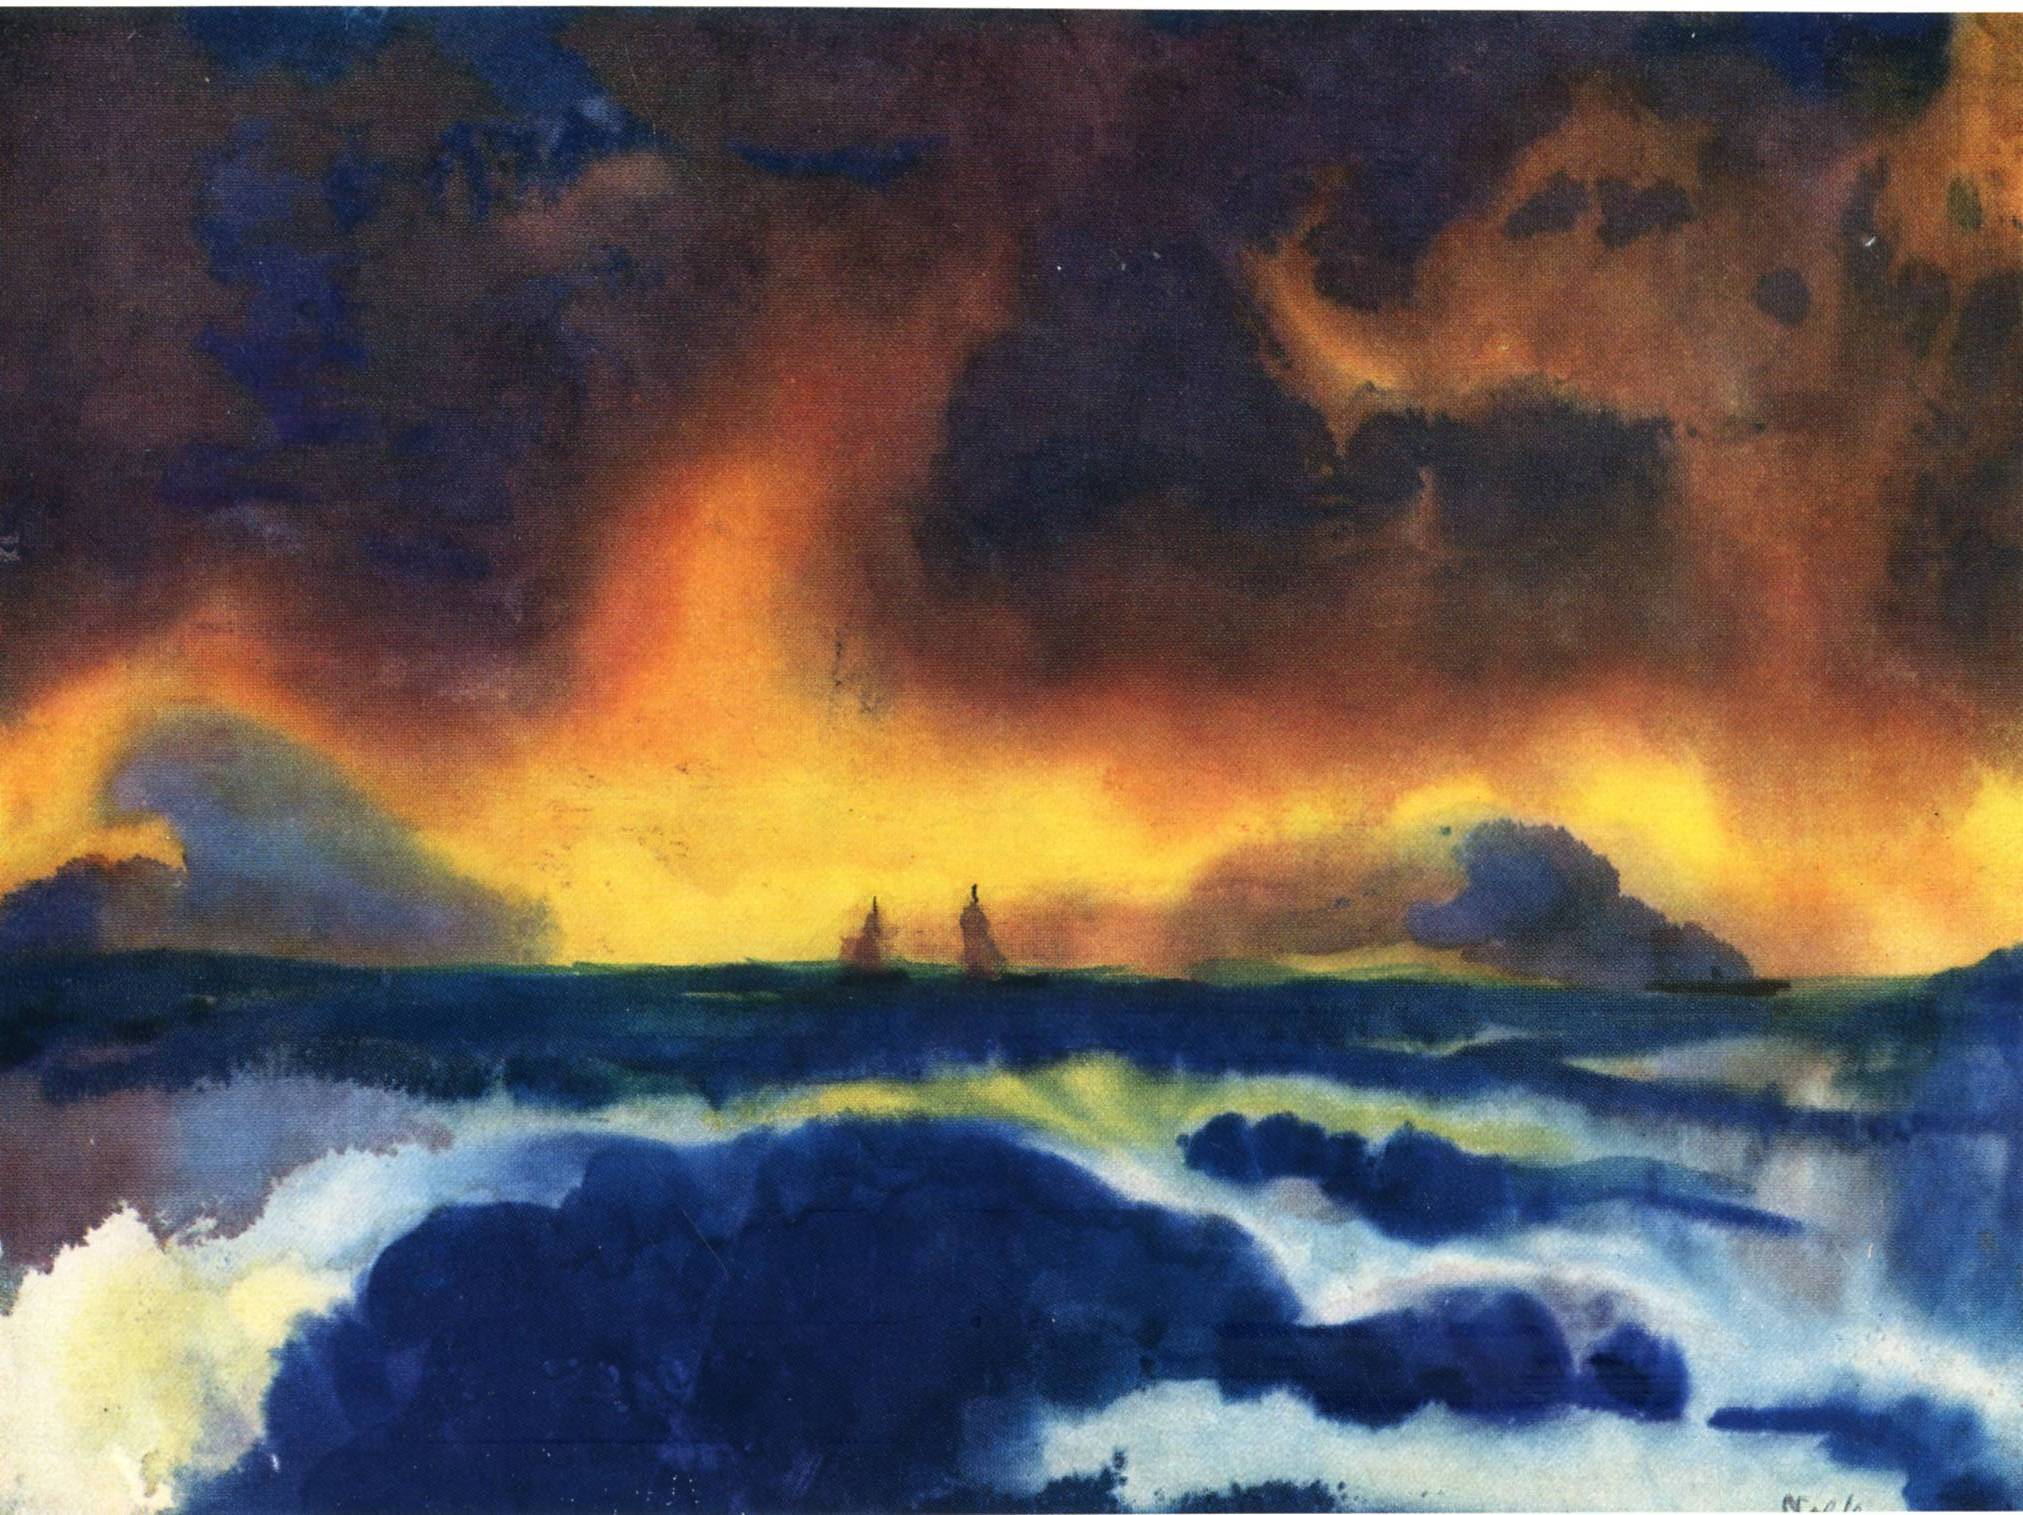 Stormy Sea by Emil Nolde - 1930 - 34 x 45 cm Sprengel Museum Hannover